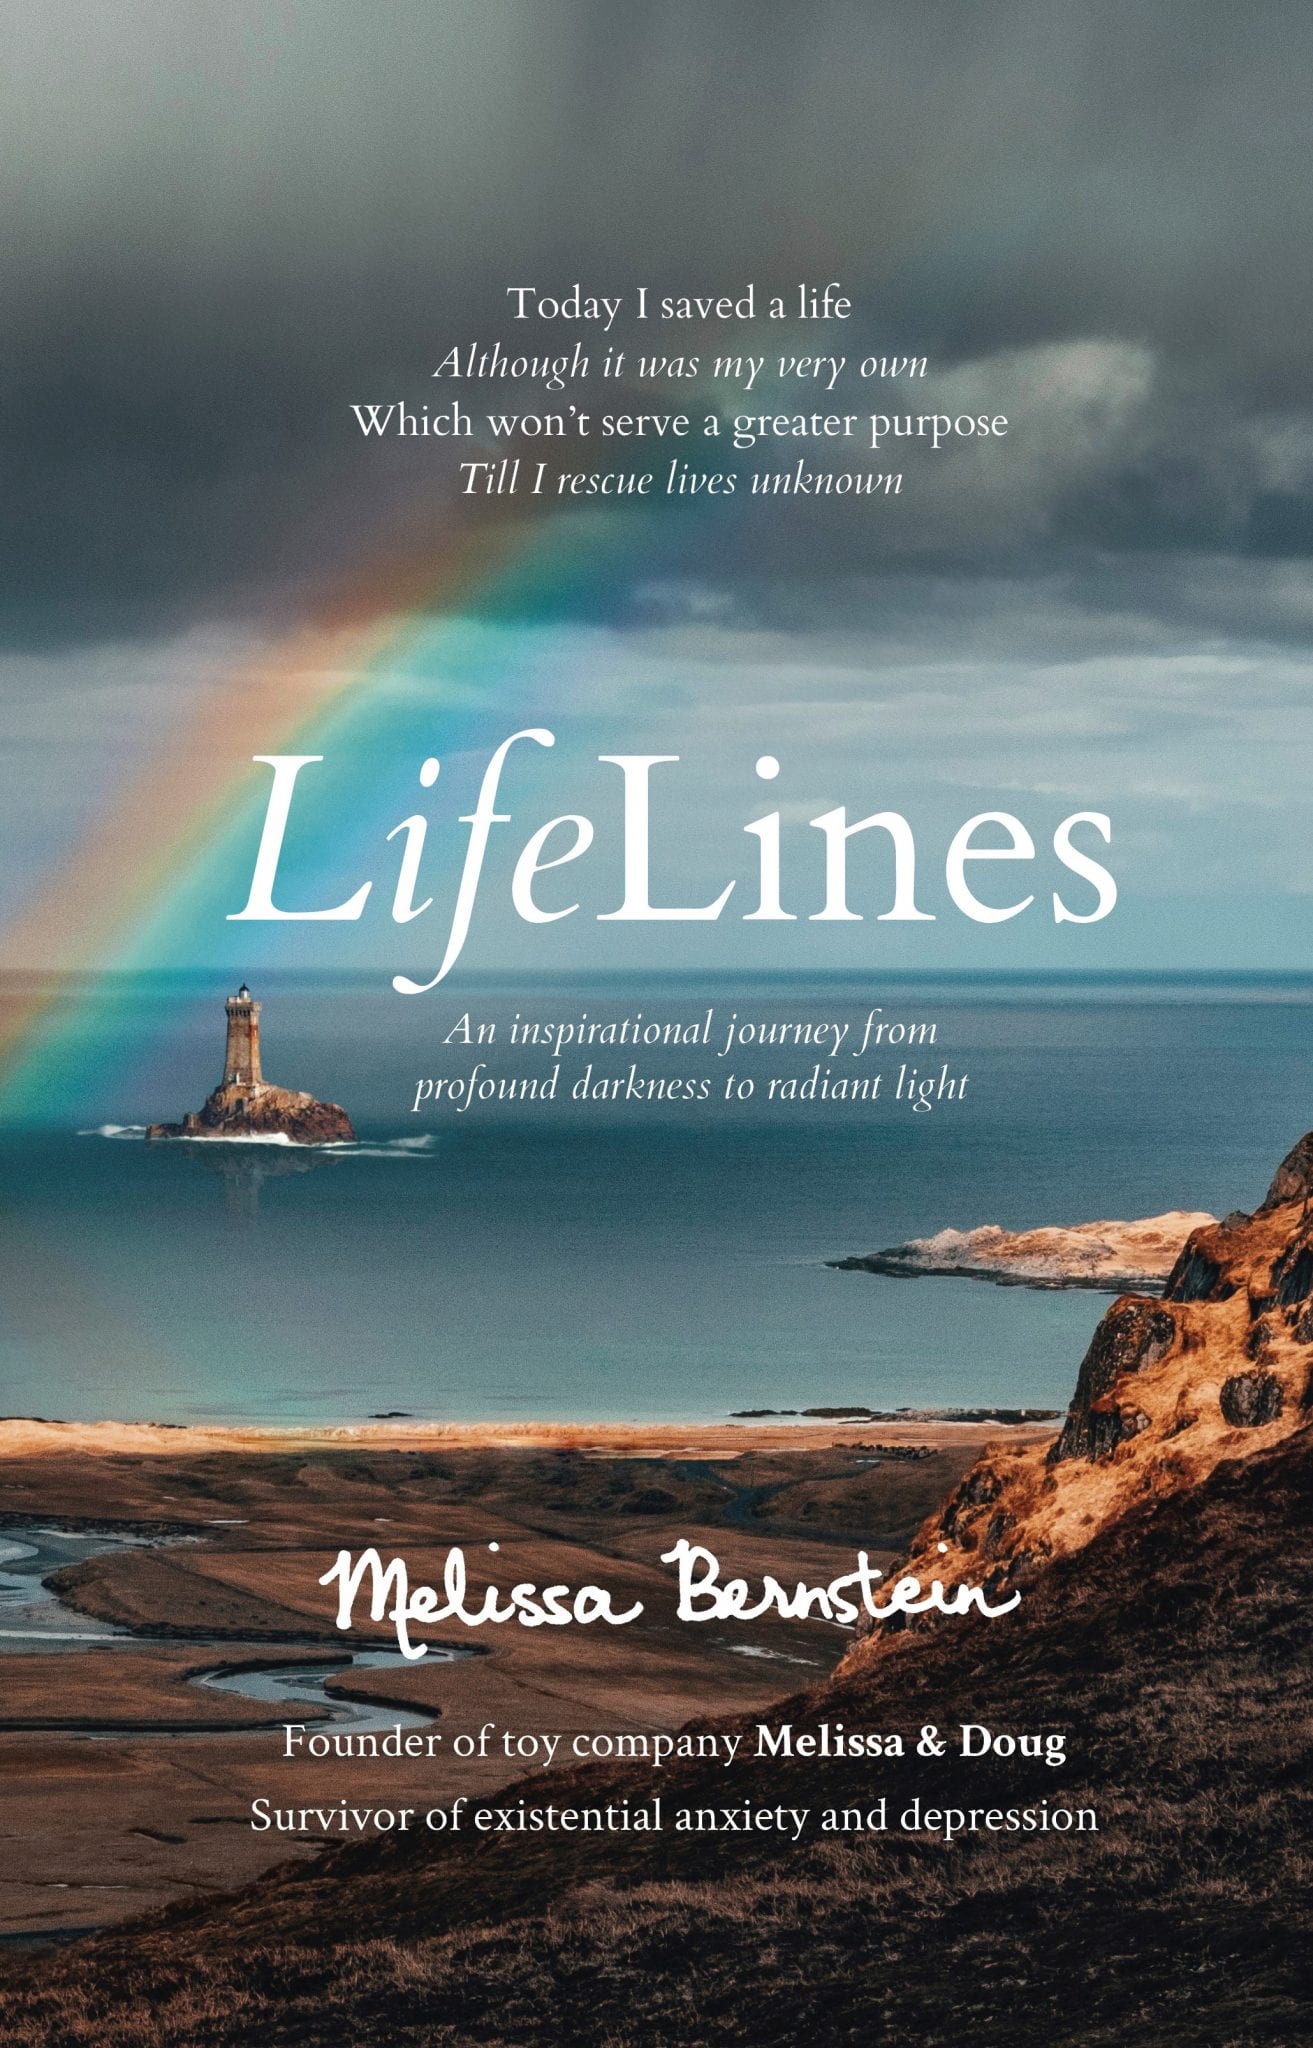 Melissa Bernstein, Co-Founder of 'Melissa & Doug' Toys and Author of LifeLines